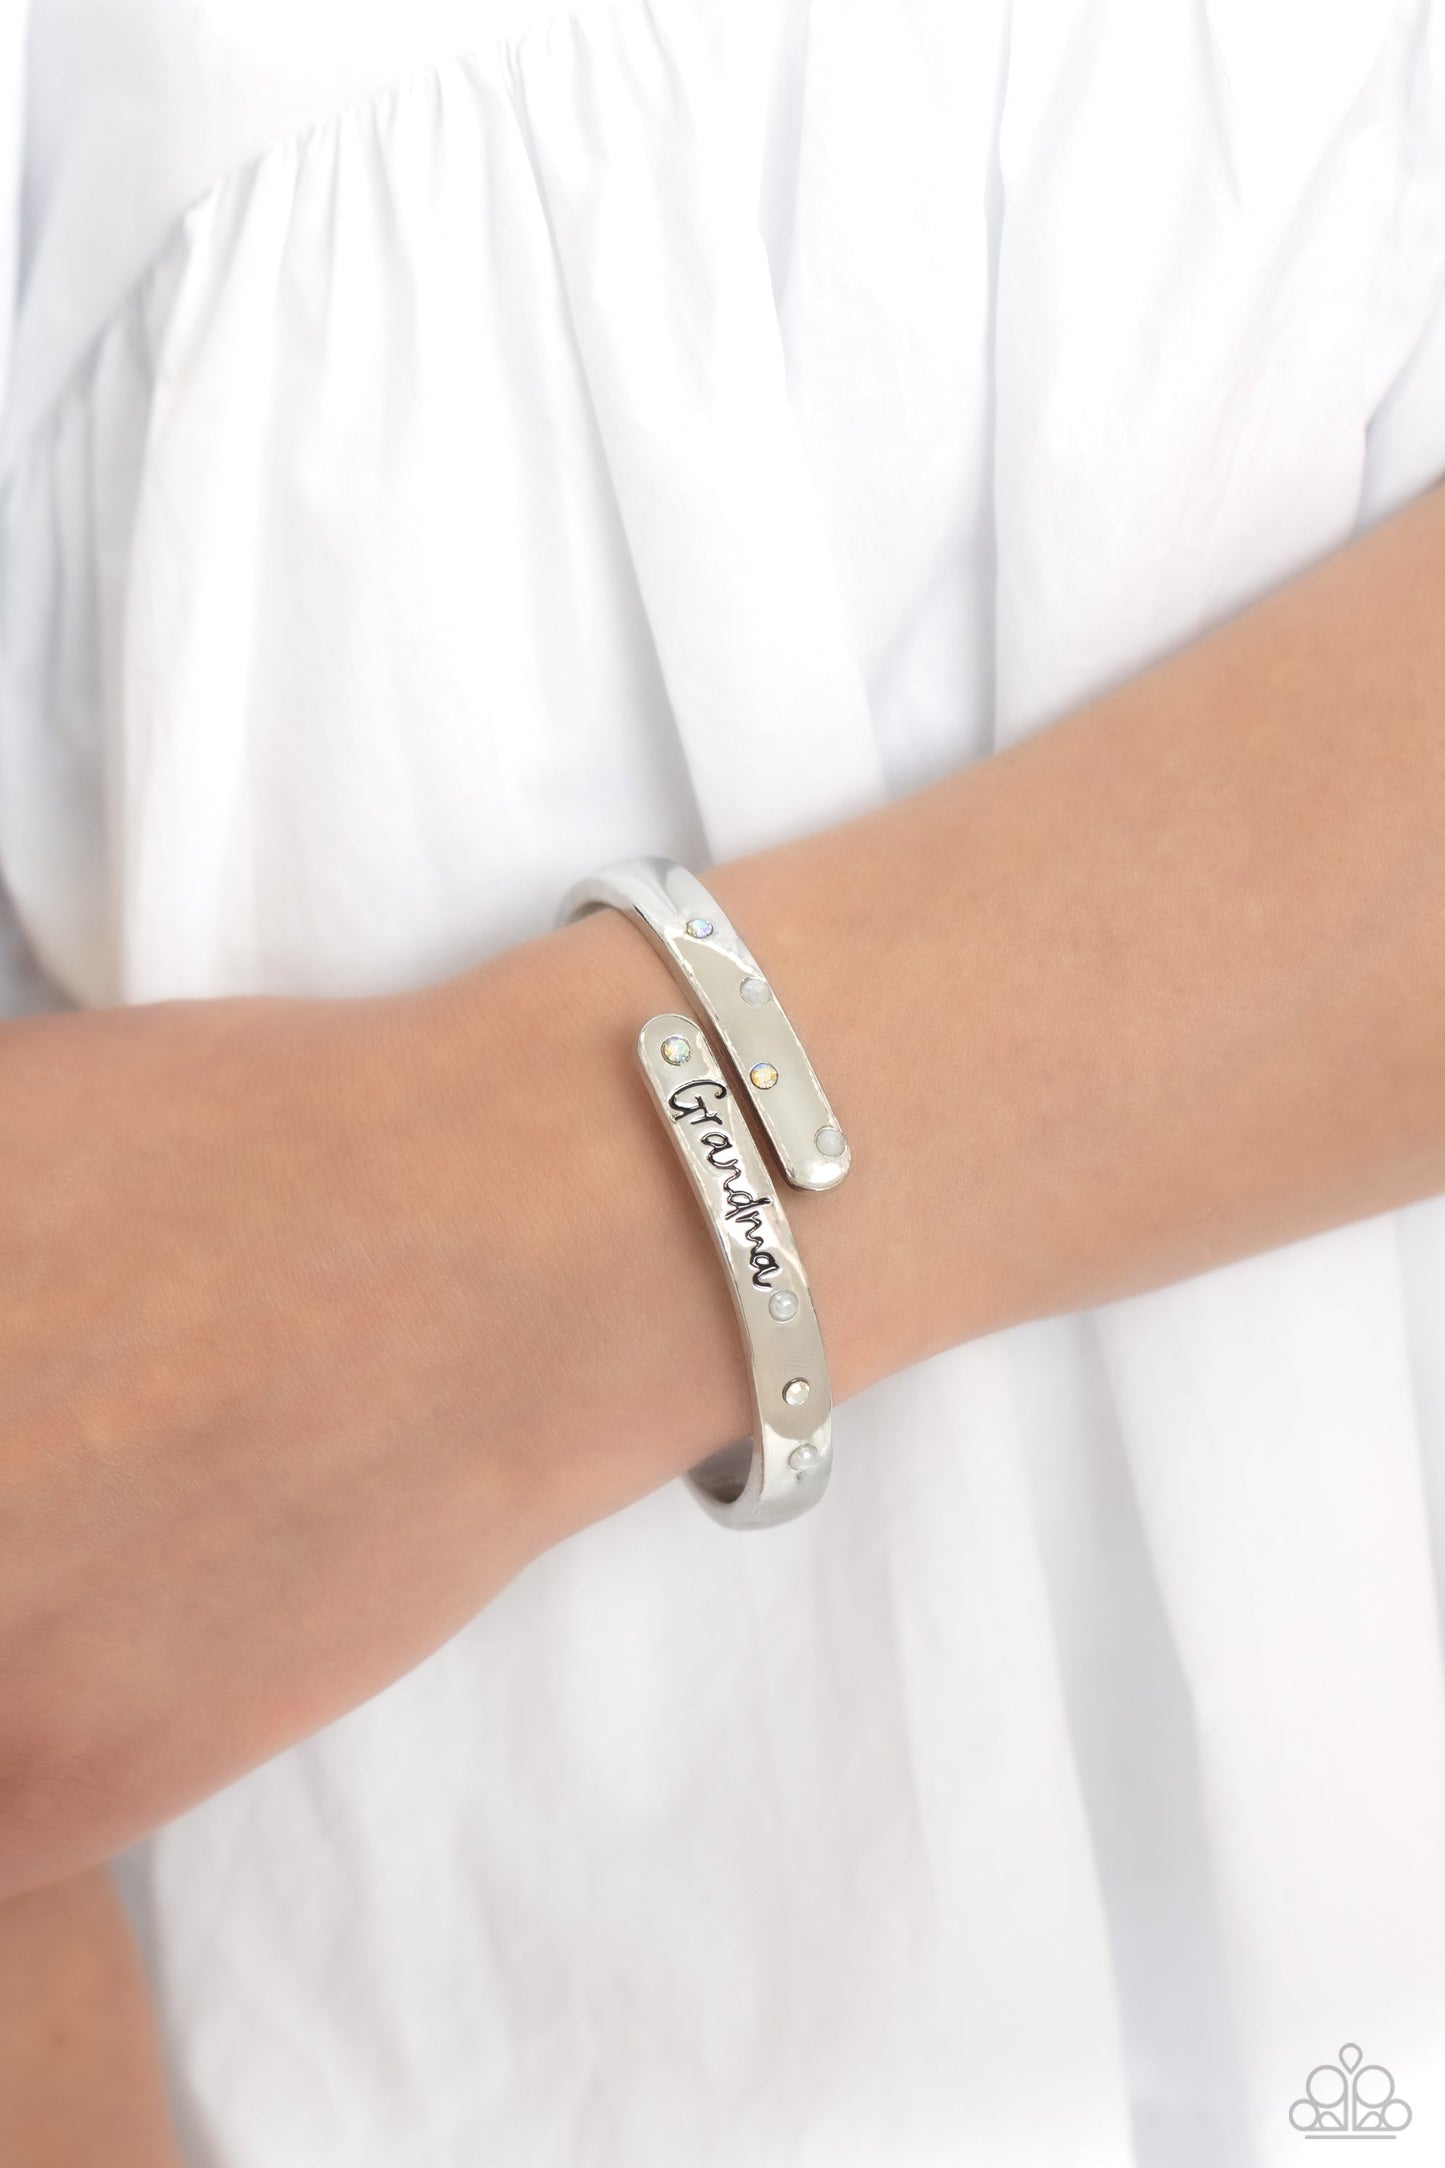 Gorgeous Grandma - White Pearl, Iridescent Rhinestone, Etched "Grandma" Silver Hinge Bracelet